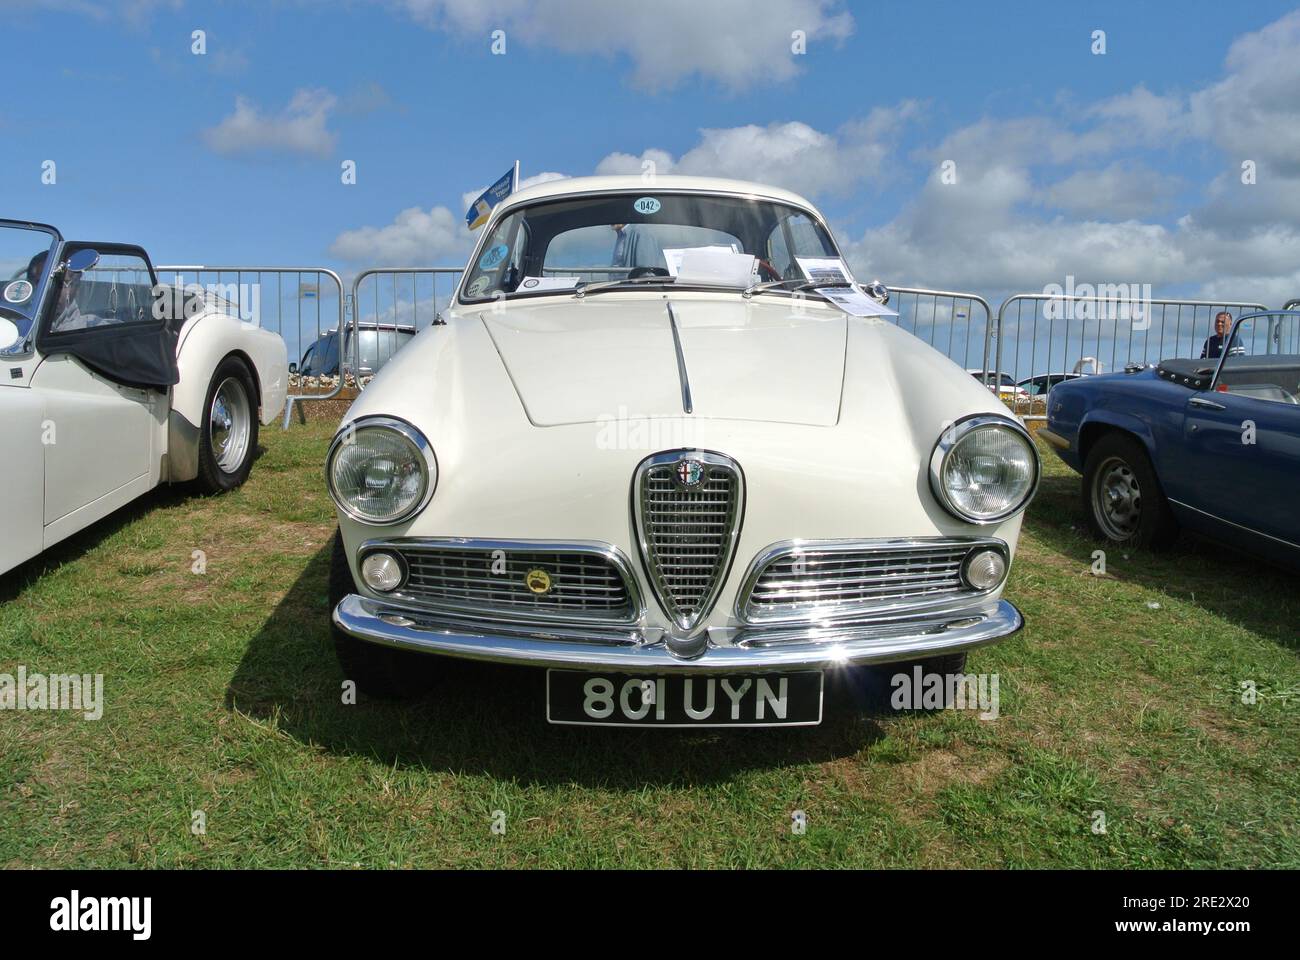 A 1960 Alfa Romeo Milano parked on display at the English Riviera classic car show, Paignton, Devon, England, UK. Stock Photo